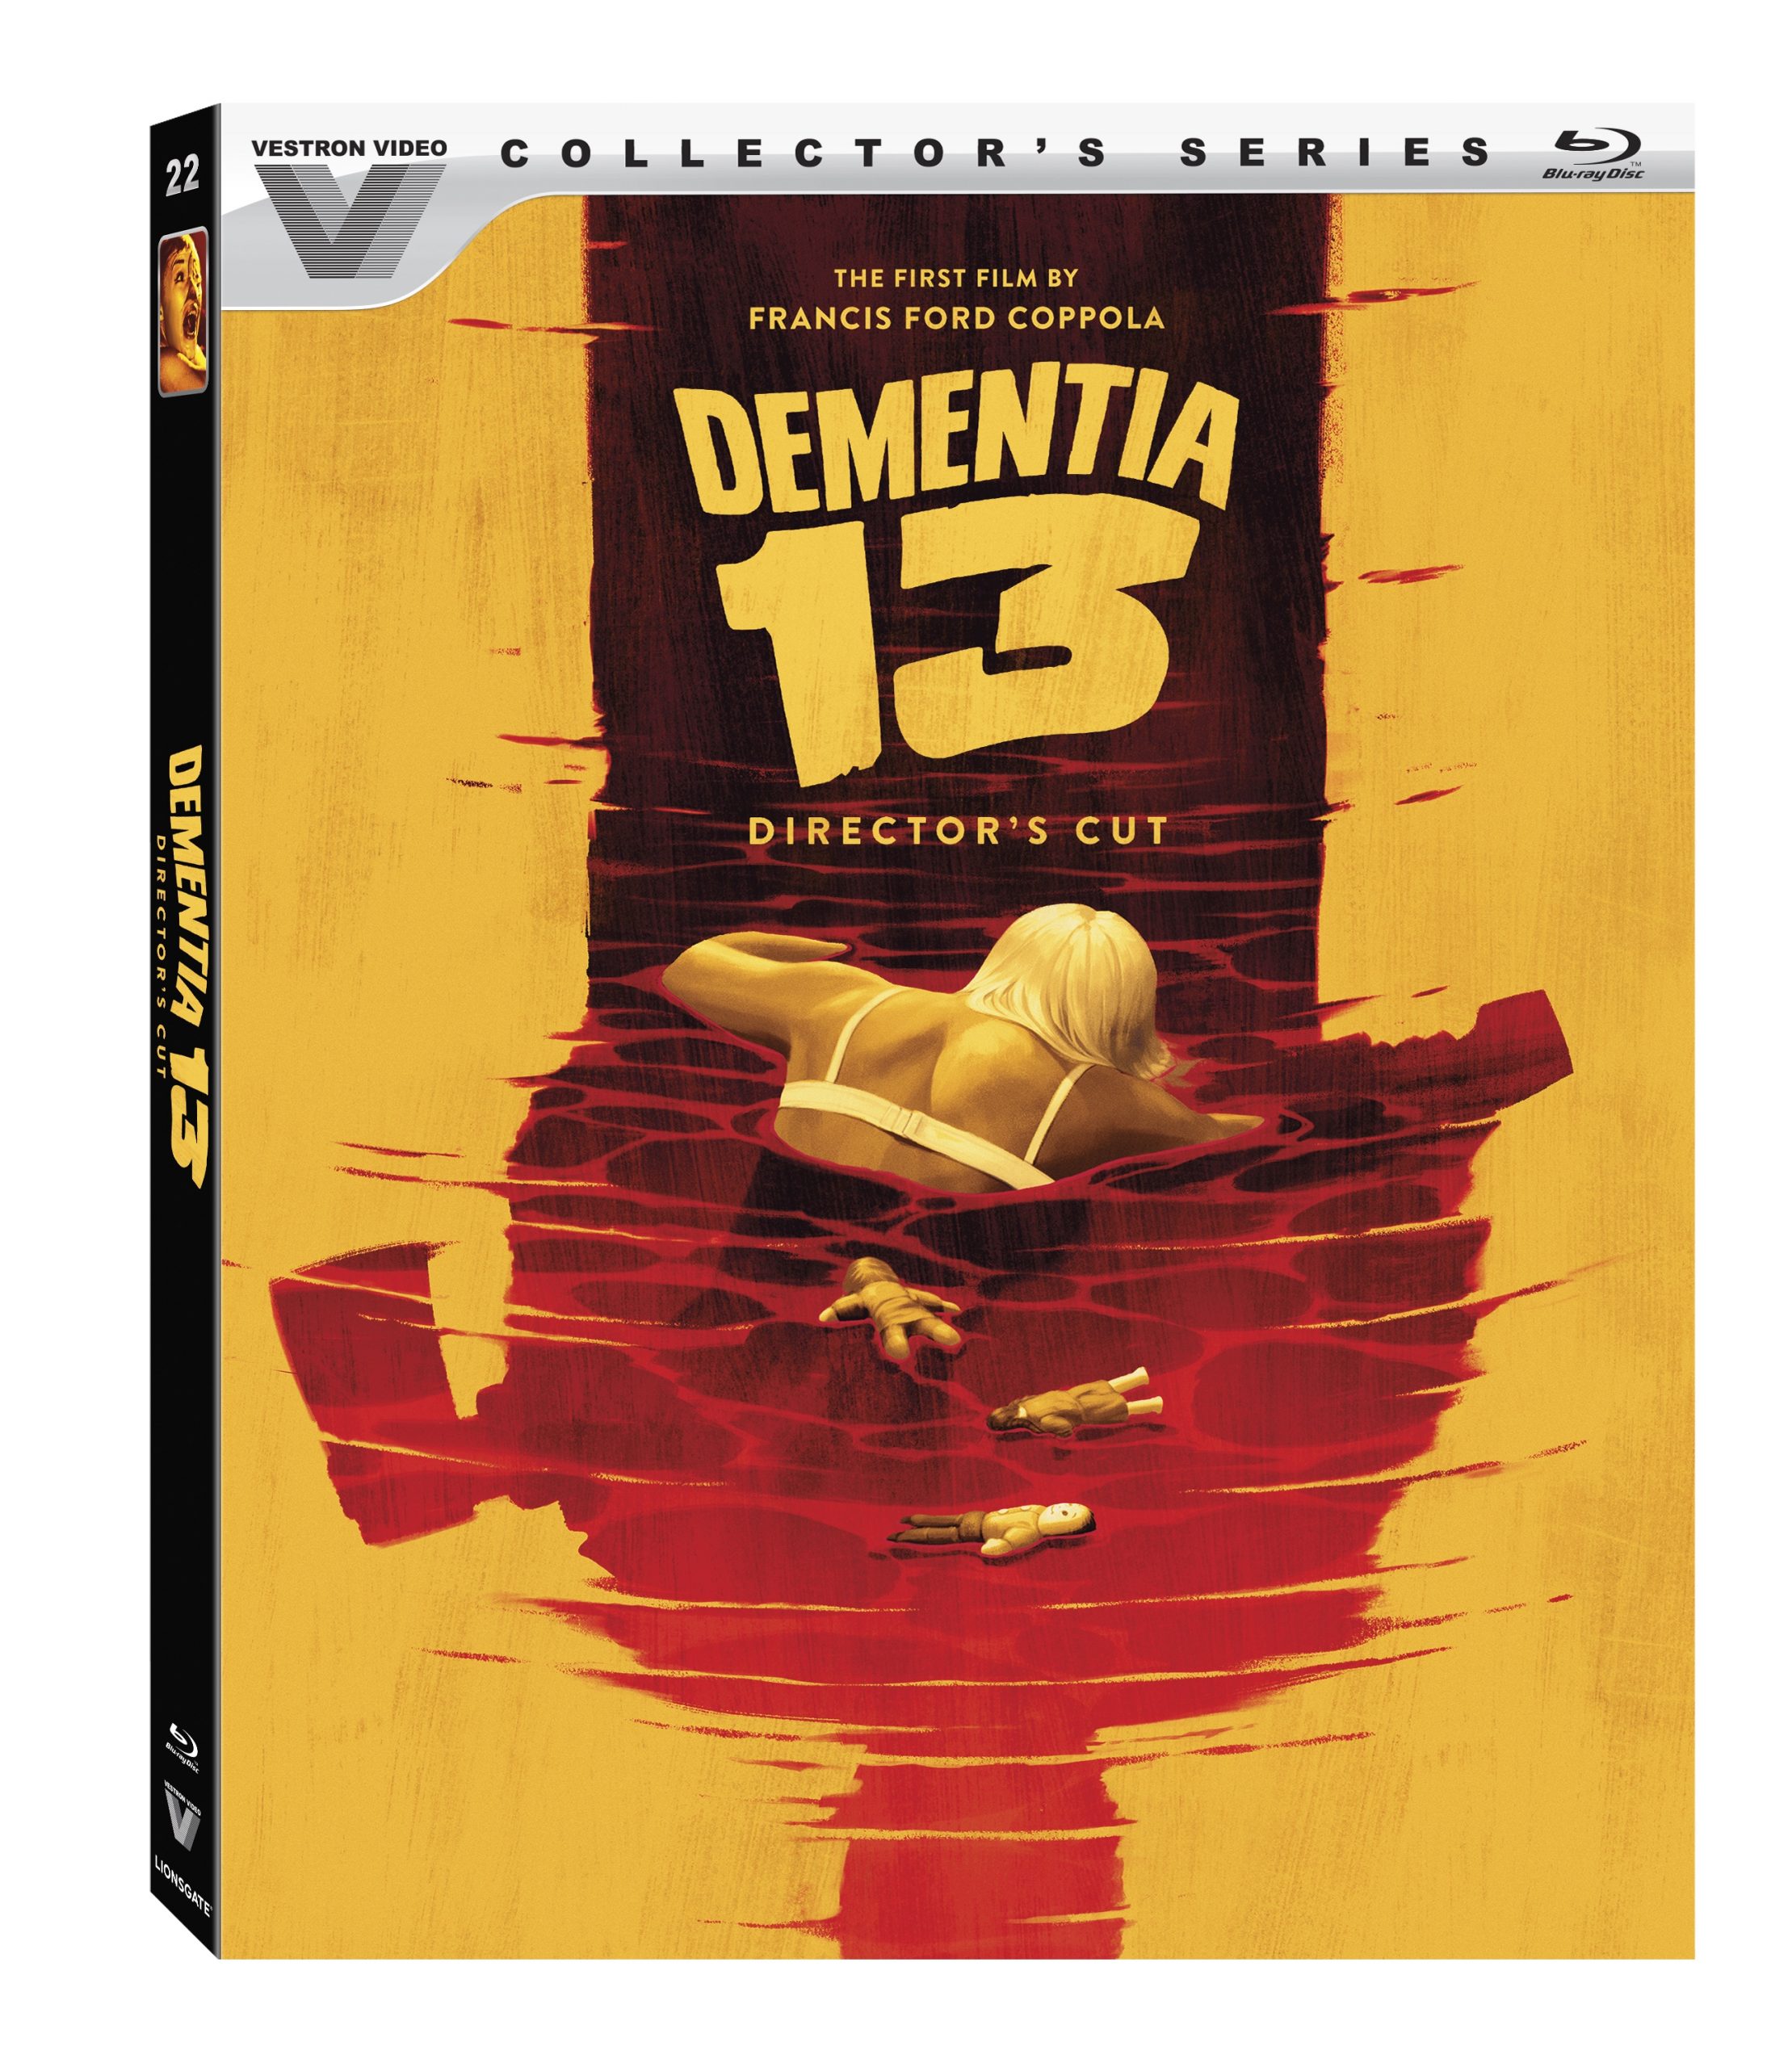 Dementia 13- Director's Cut- Blu-ray Review